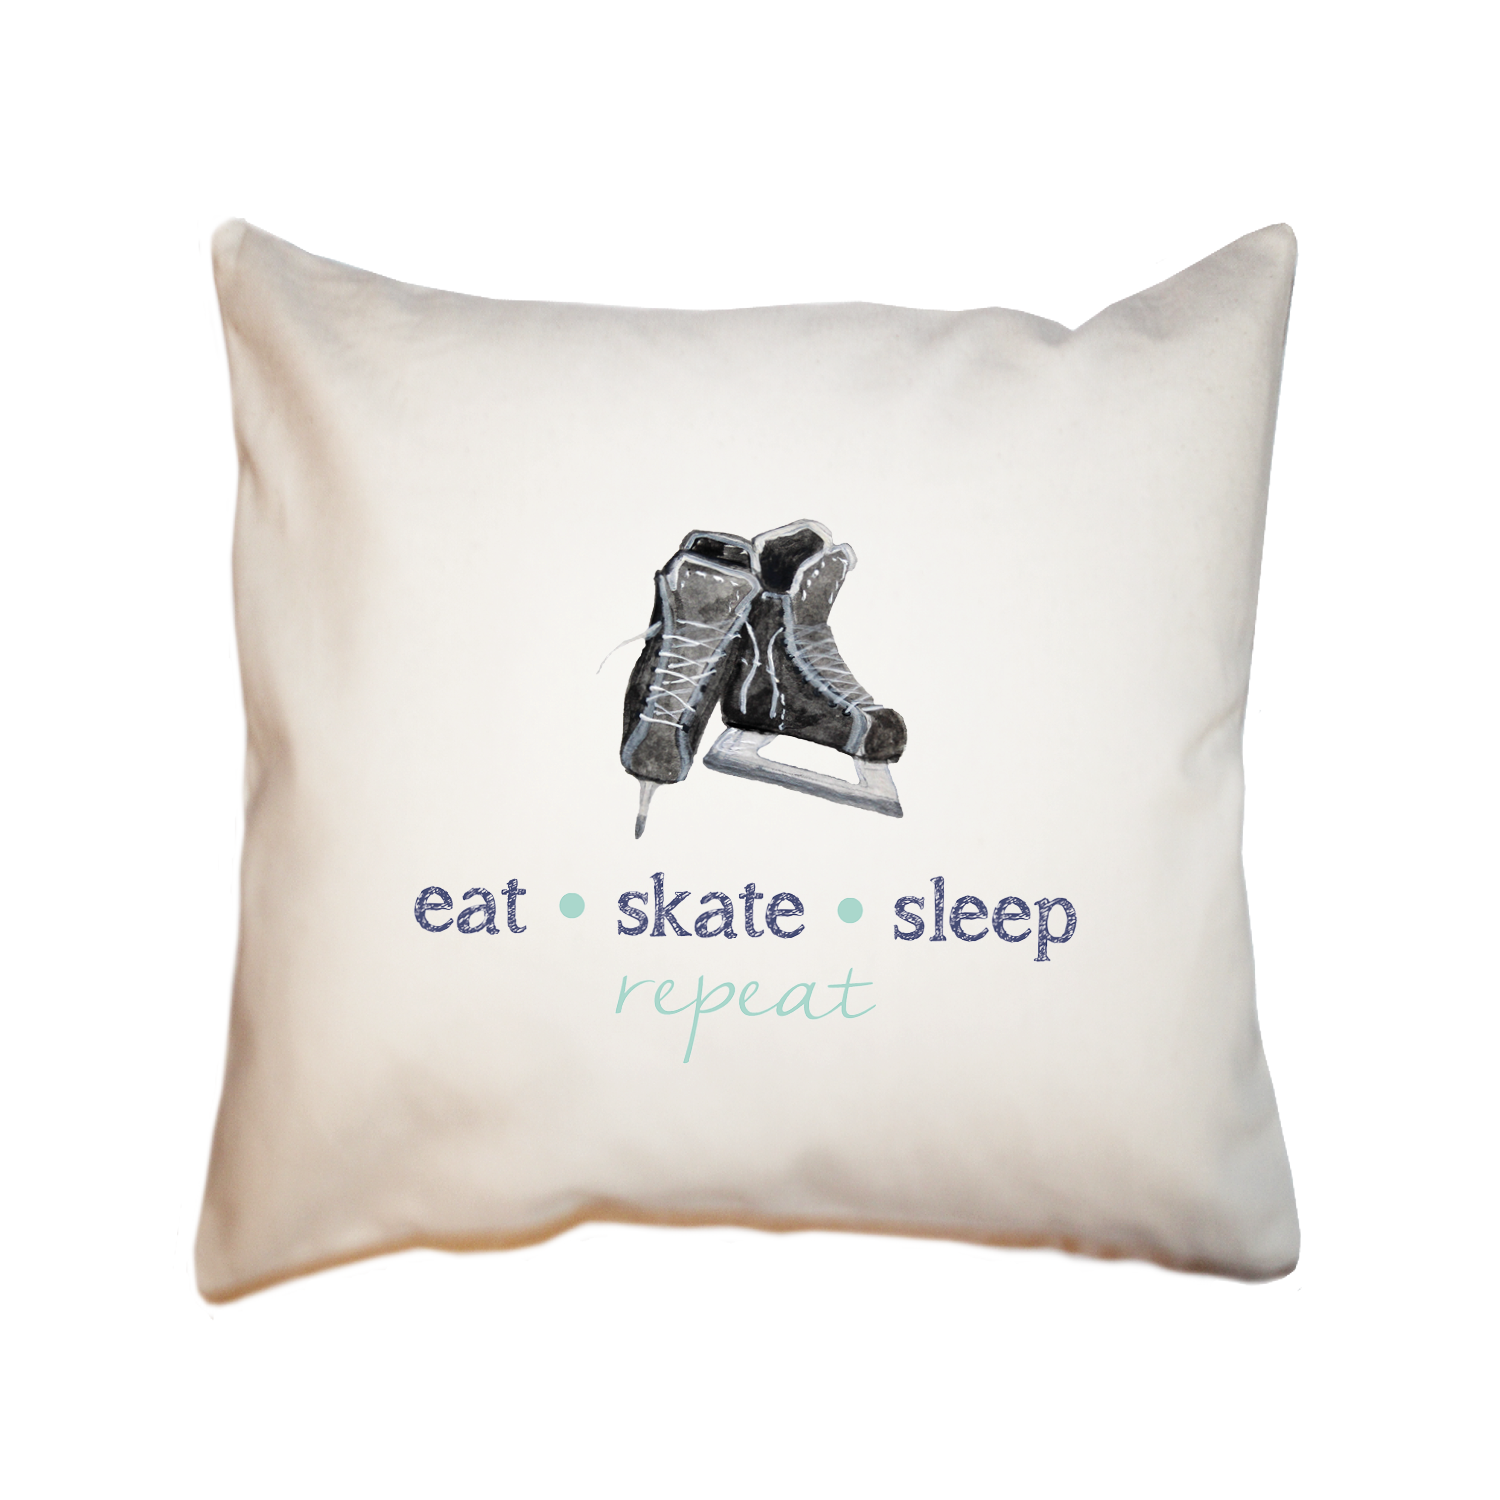 eat skate sleep repeat square pillow